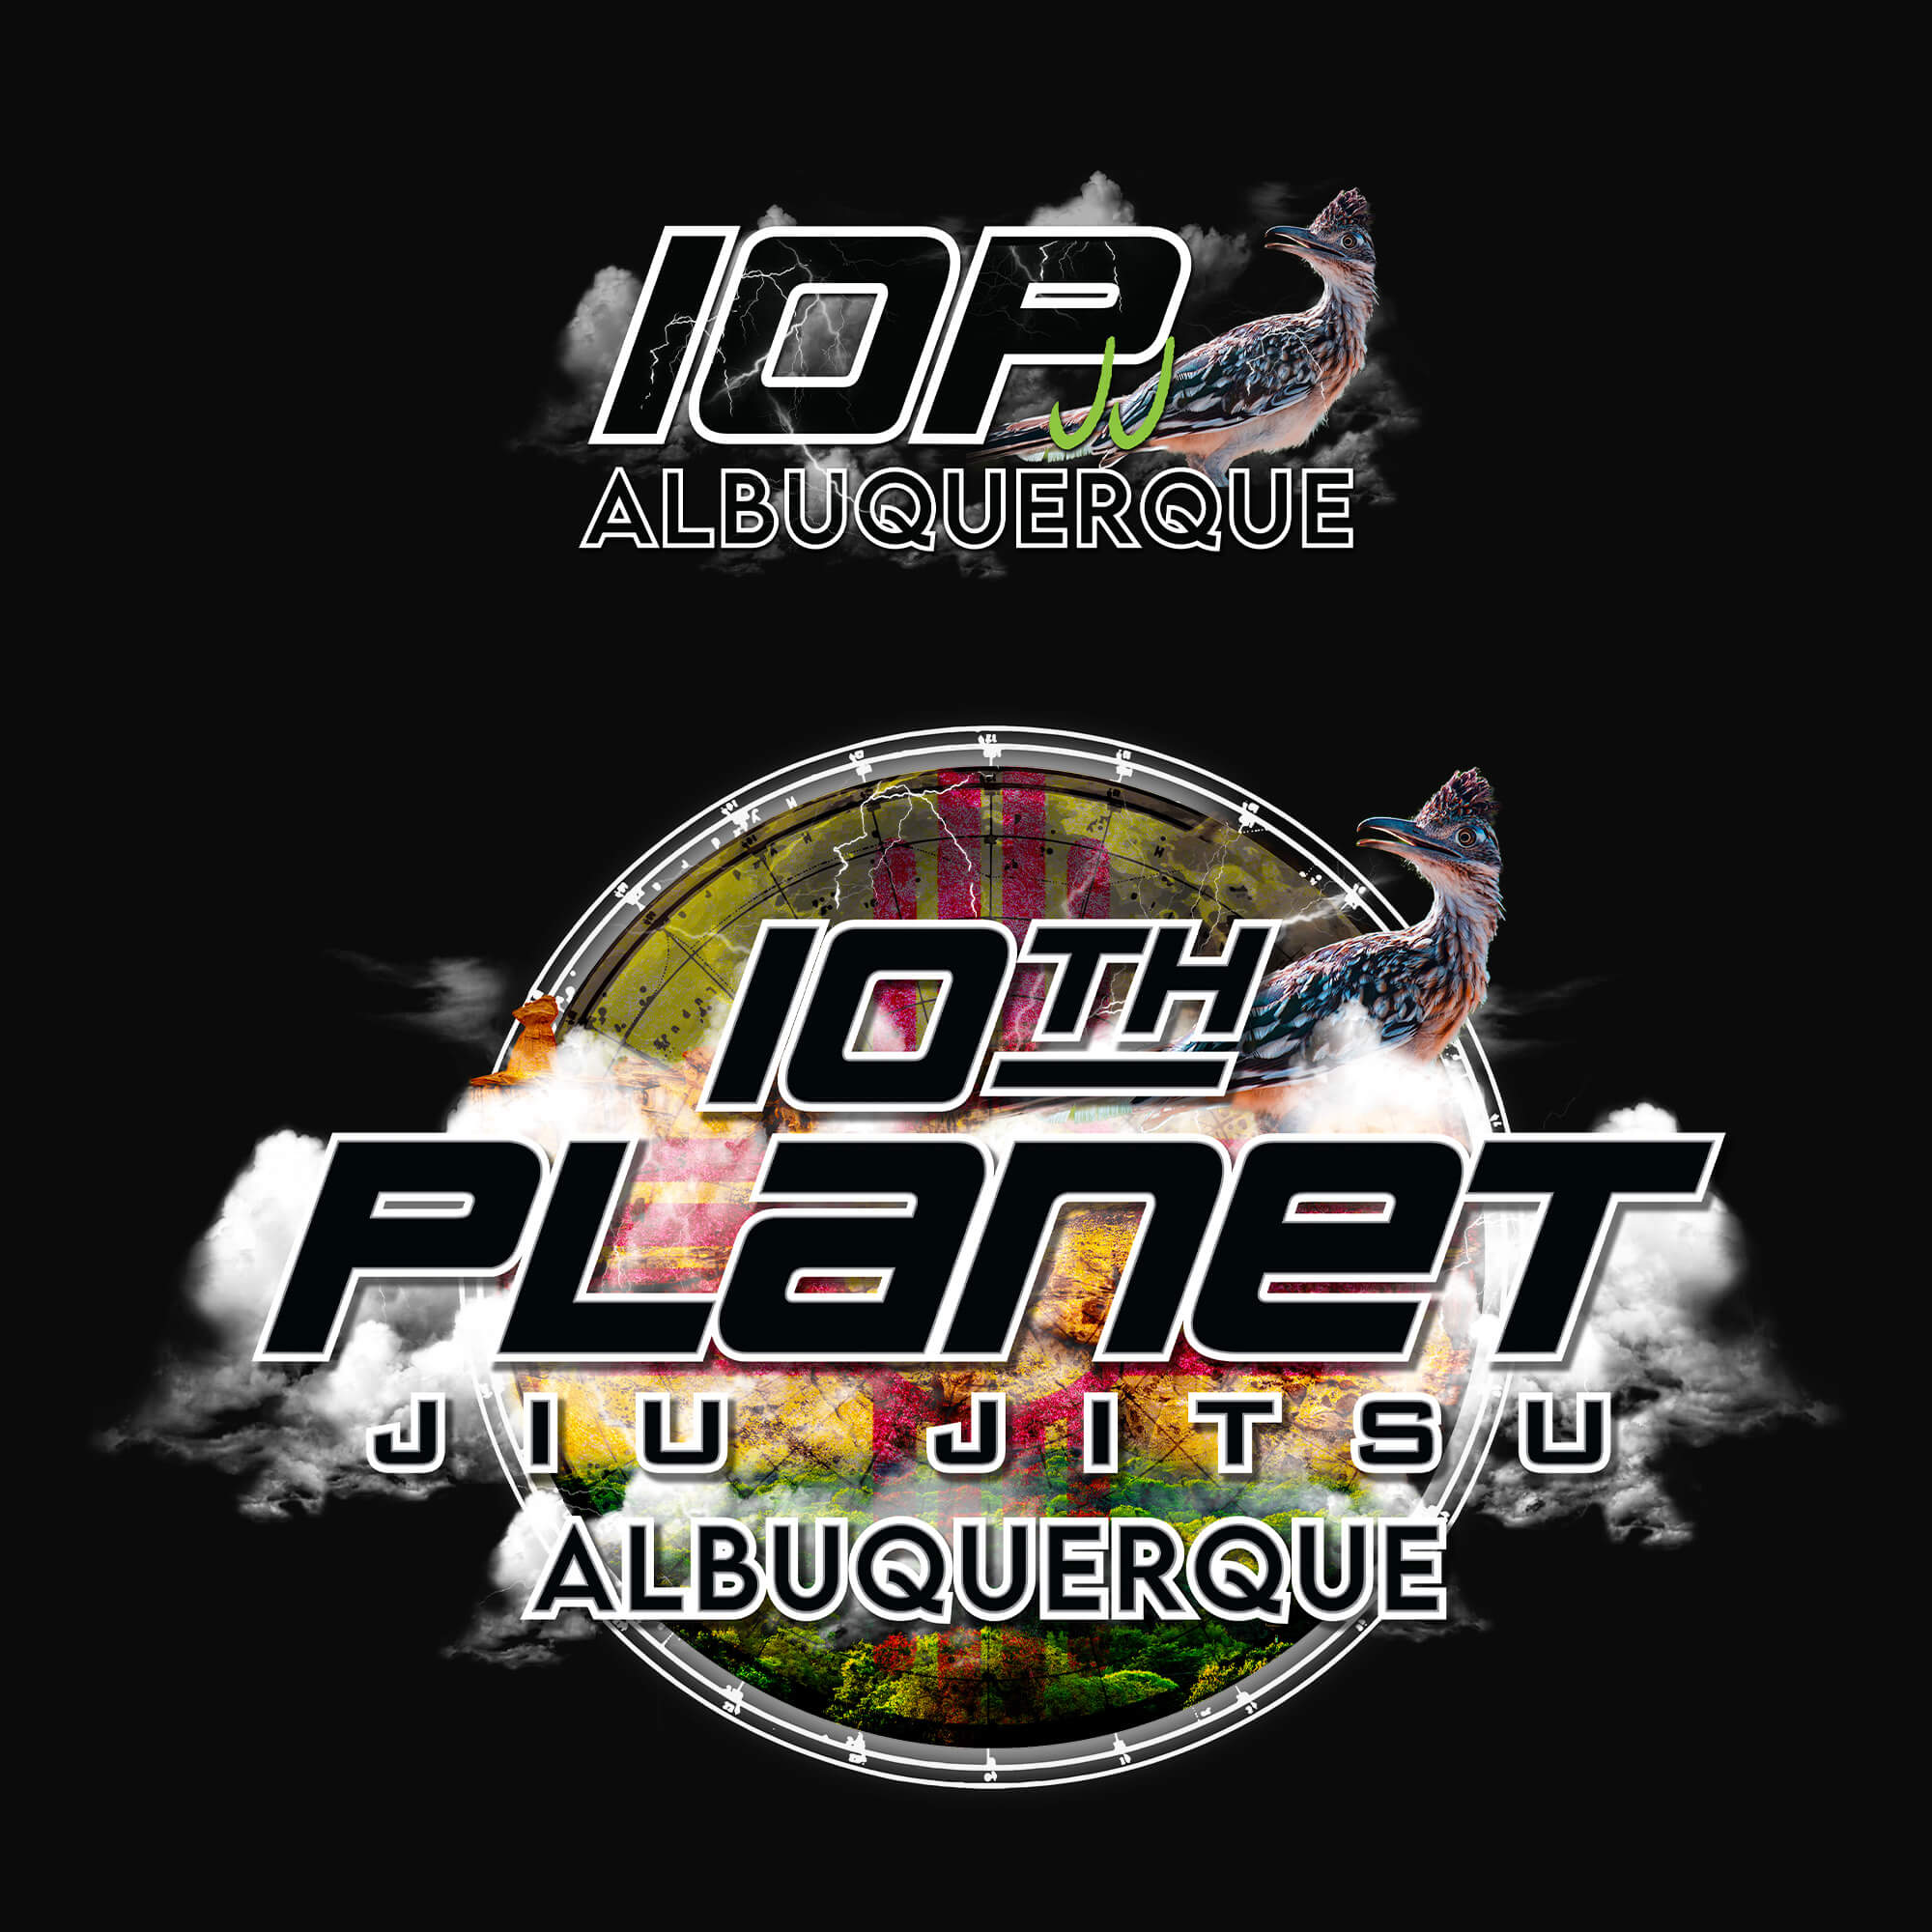 Example Custom Digital Artwork graphic design Services for 10th Planet Jiu Jitsu Albuquerque by Eagr Ones